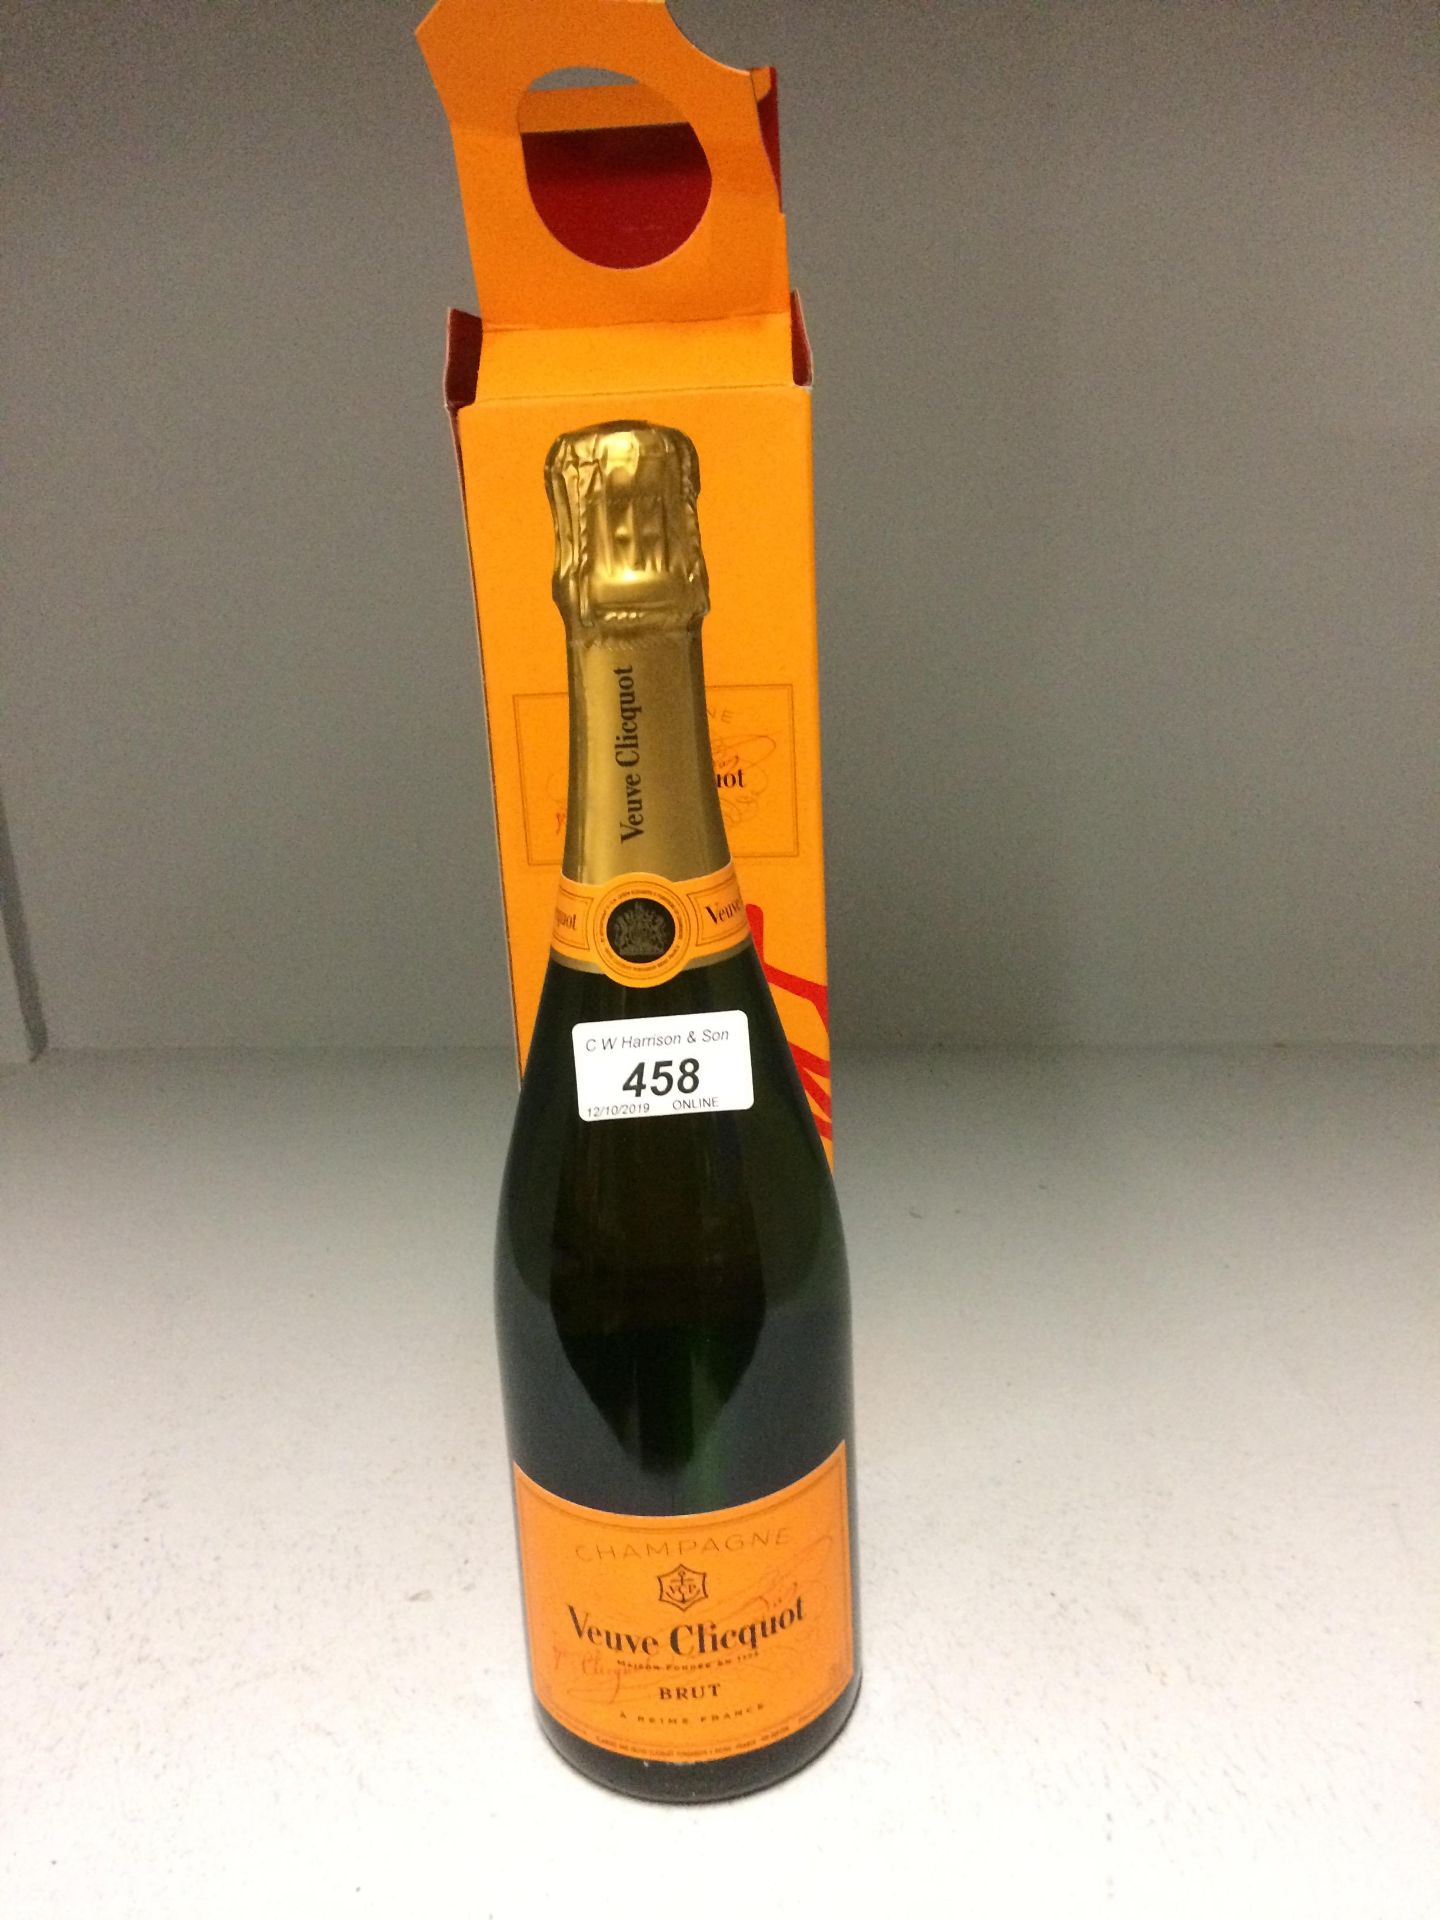 750ml bottle Veuve Clicquot champagne brut - Image 2 of 2